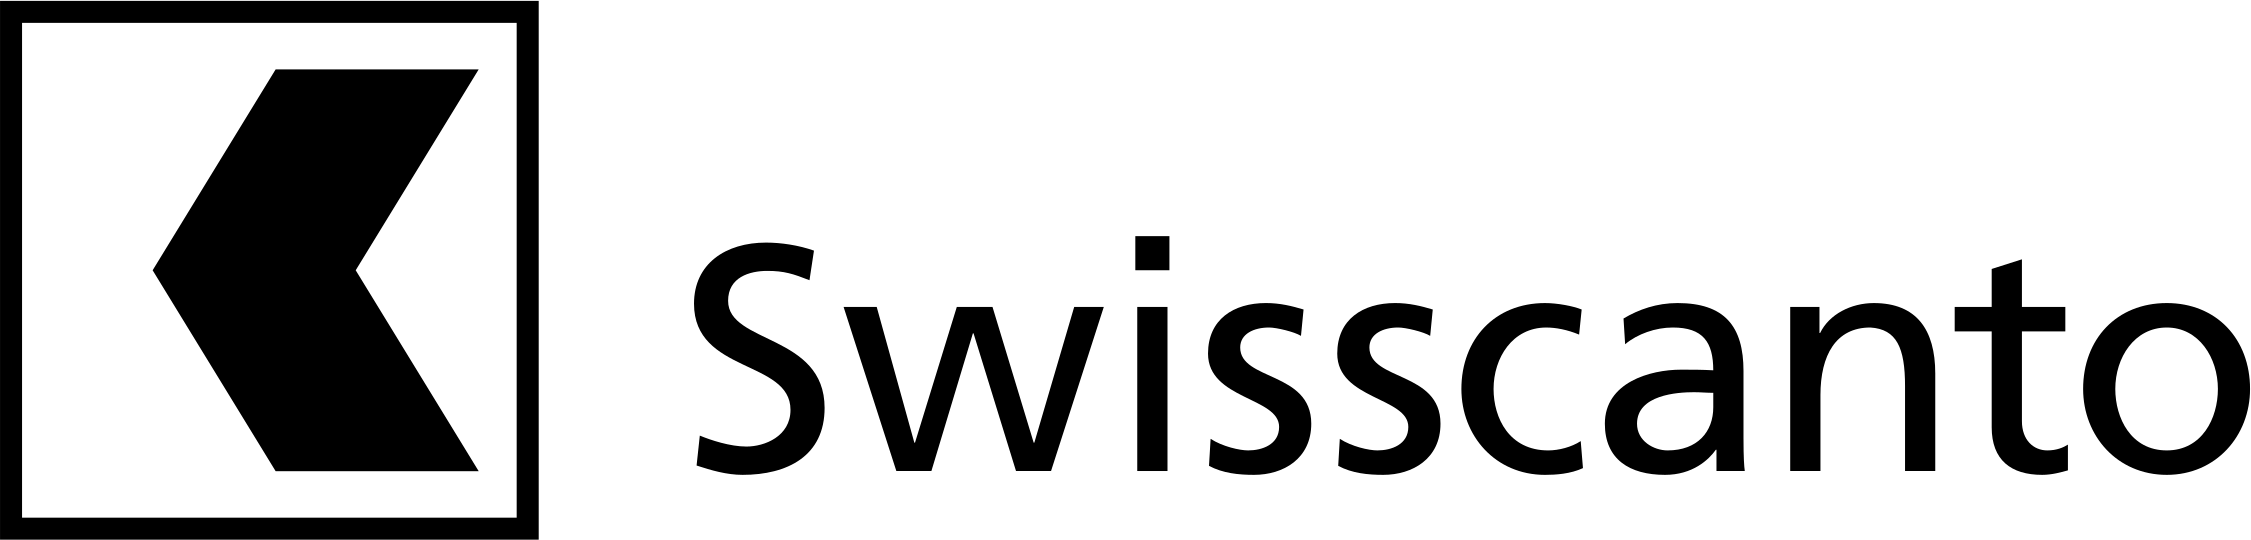 Logotipo de Swisscanto svg